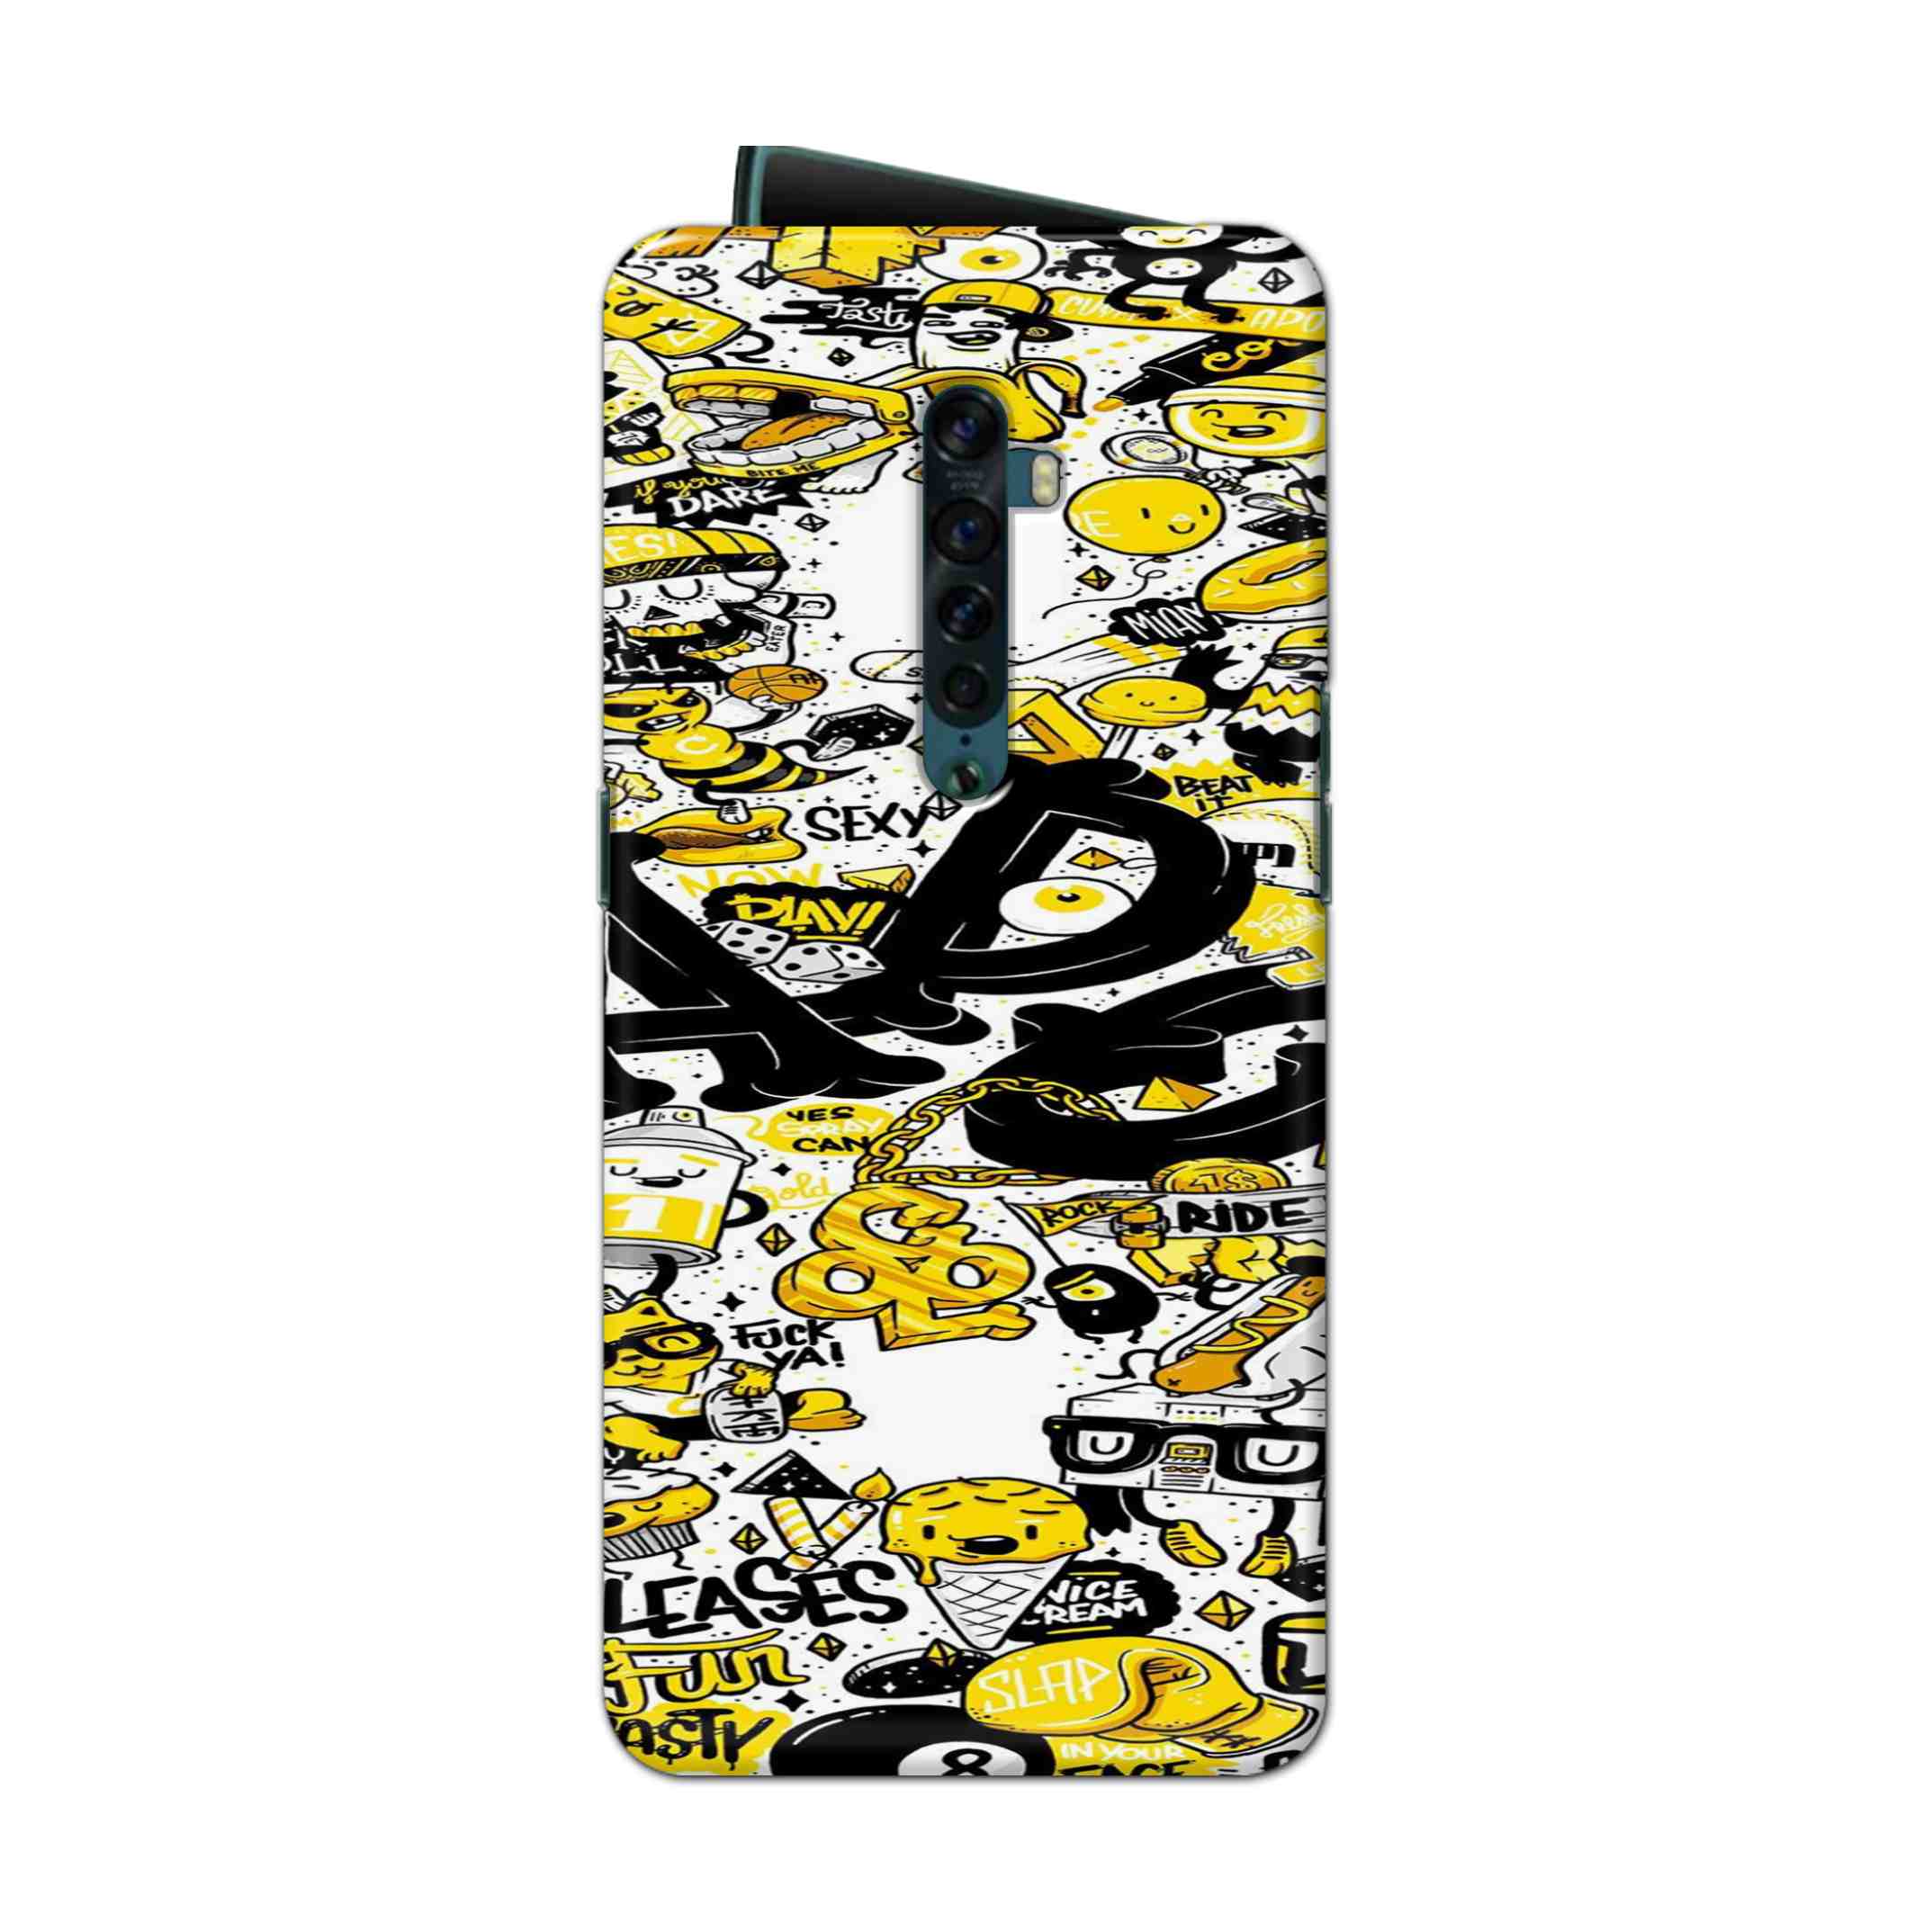 Buy Ado Hard Back Mobile Phone Case Cover For Oppo Reno 2 Online